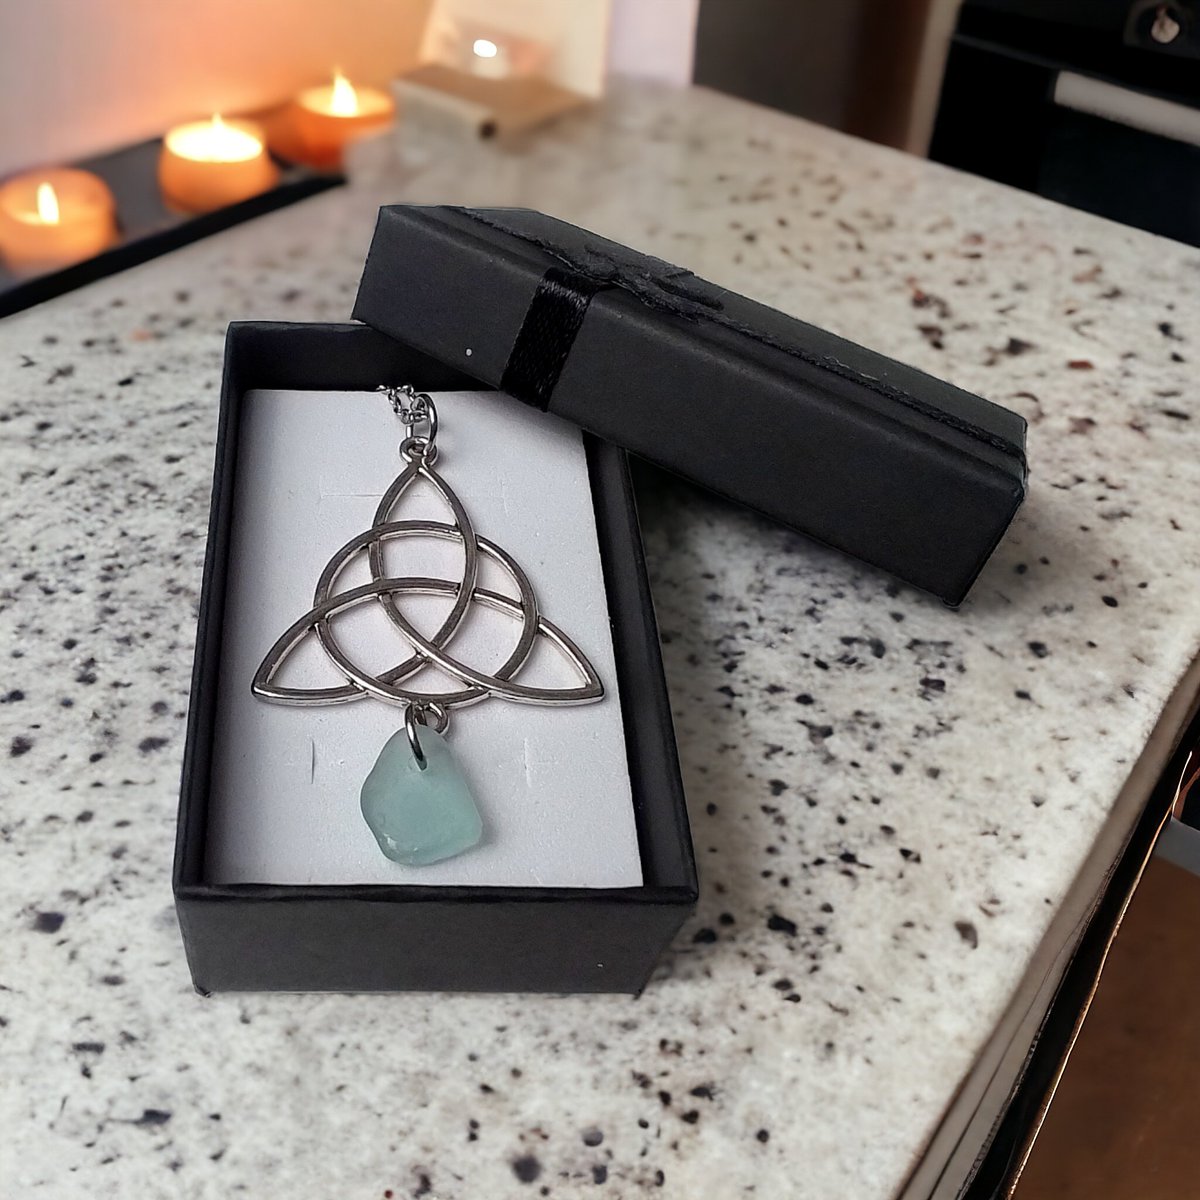 Beautifully dark sea glass necklace x🖤🌊 #jewellery #seaglass #gothic #giftsforher